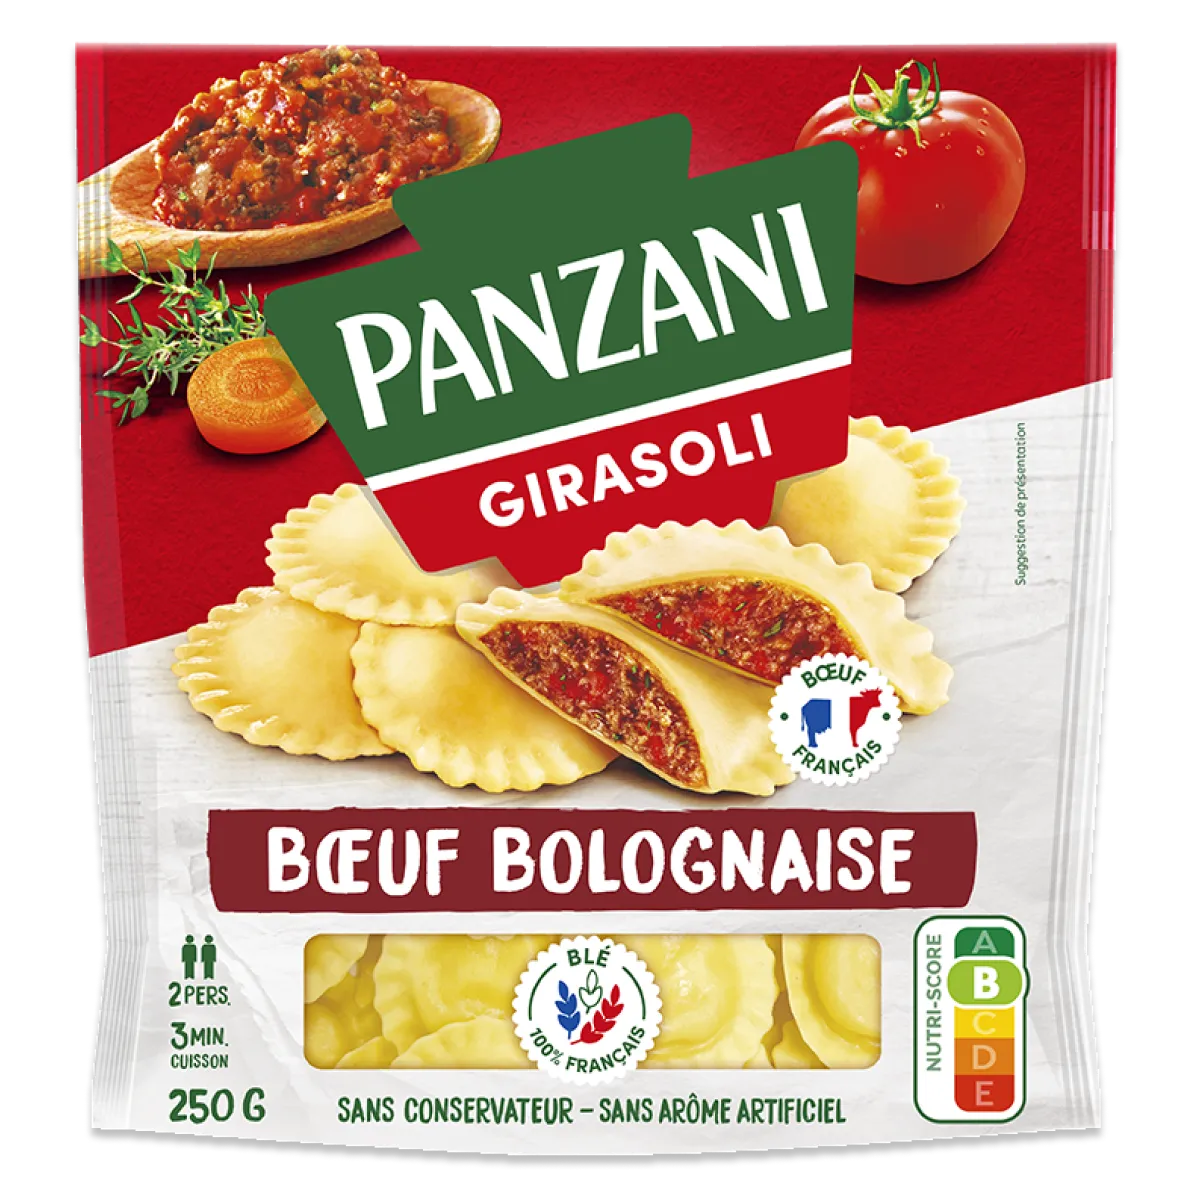 girasoli_boeuf_bolognaise_panzani